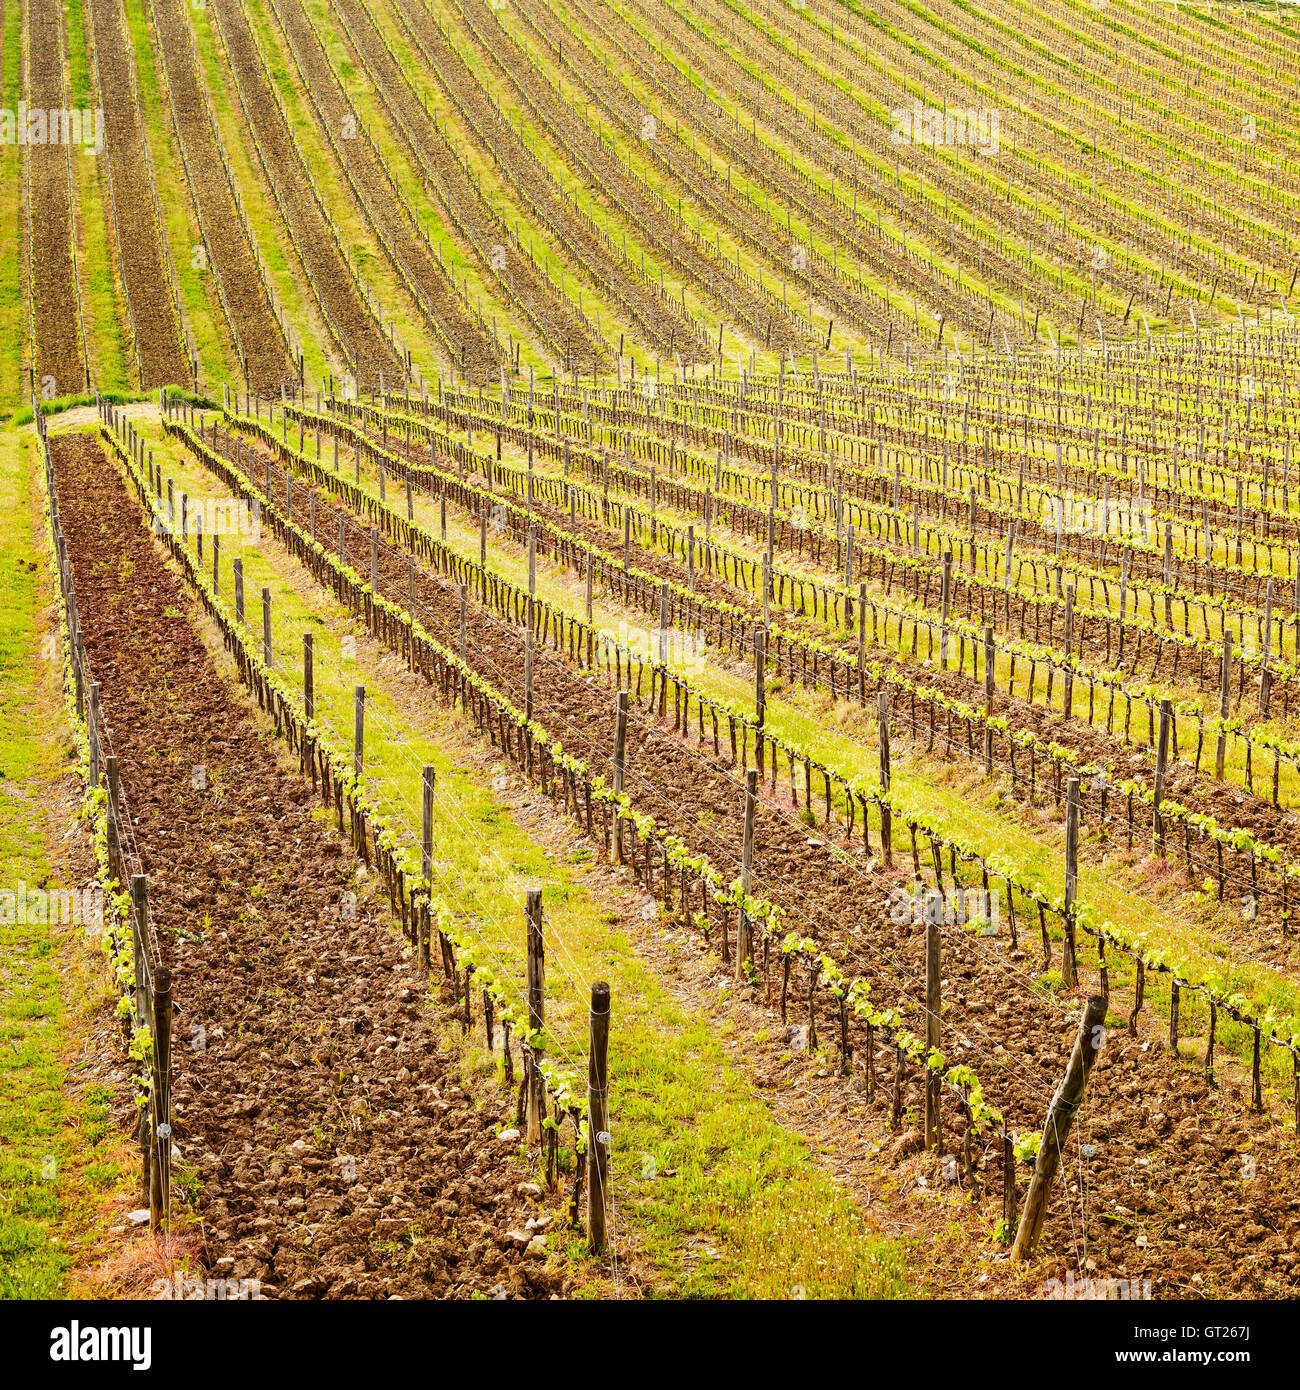 Chianti region, vineyard farmland pattern or background. Tuscany, Italy, Europe. Stock Photo